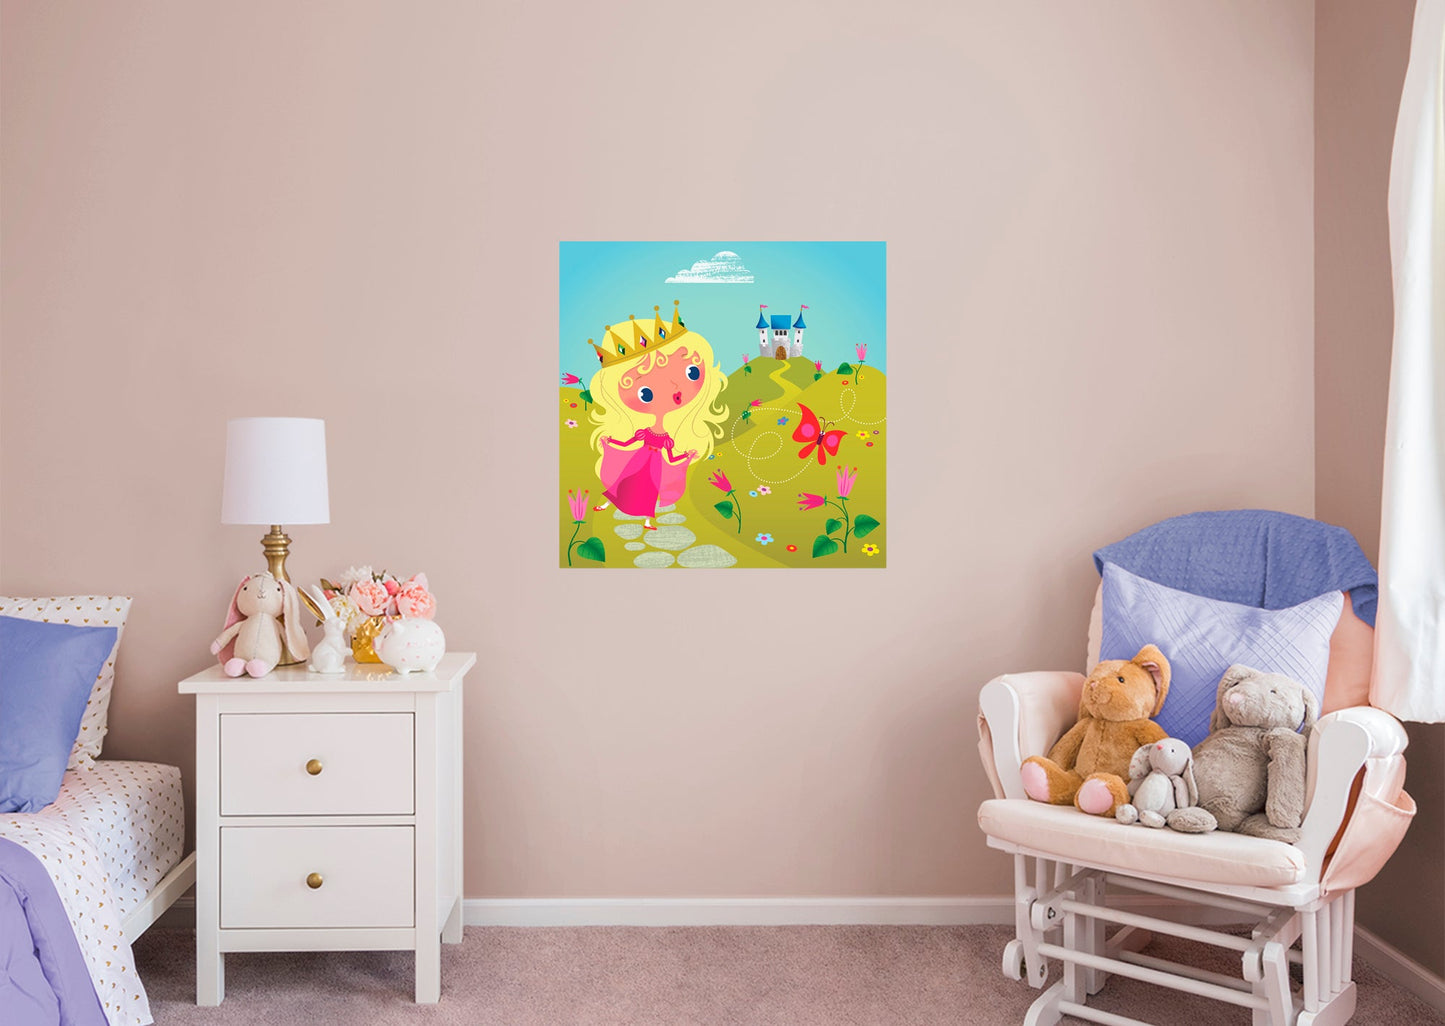 Nursery Princess:  Pink Princess Mural        -   Removable Wall   Adhesive Decal